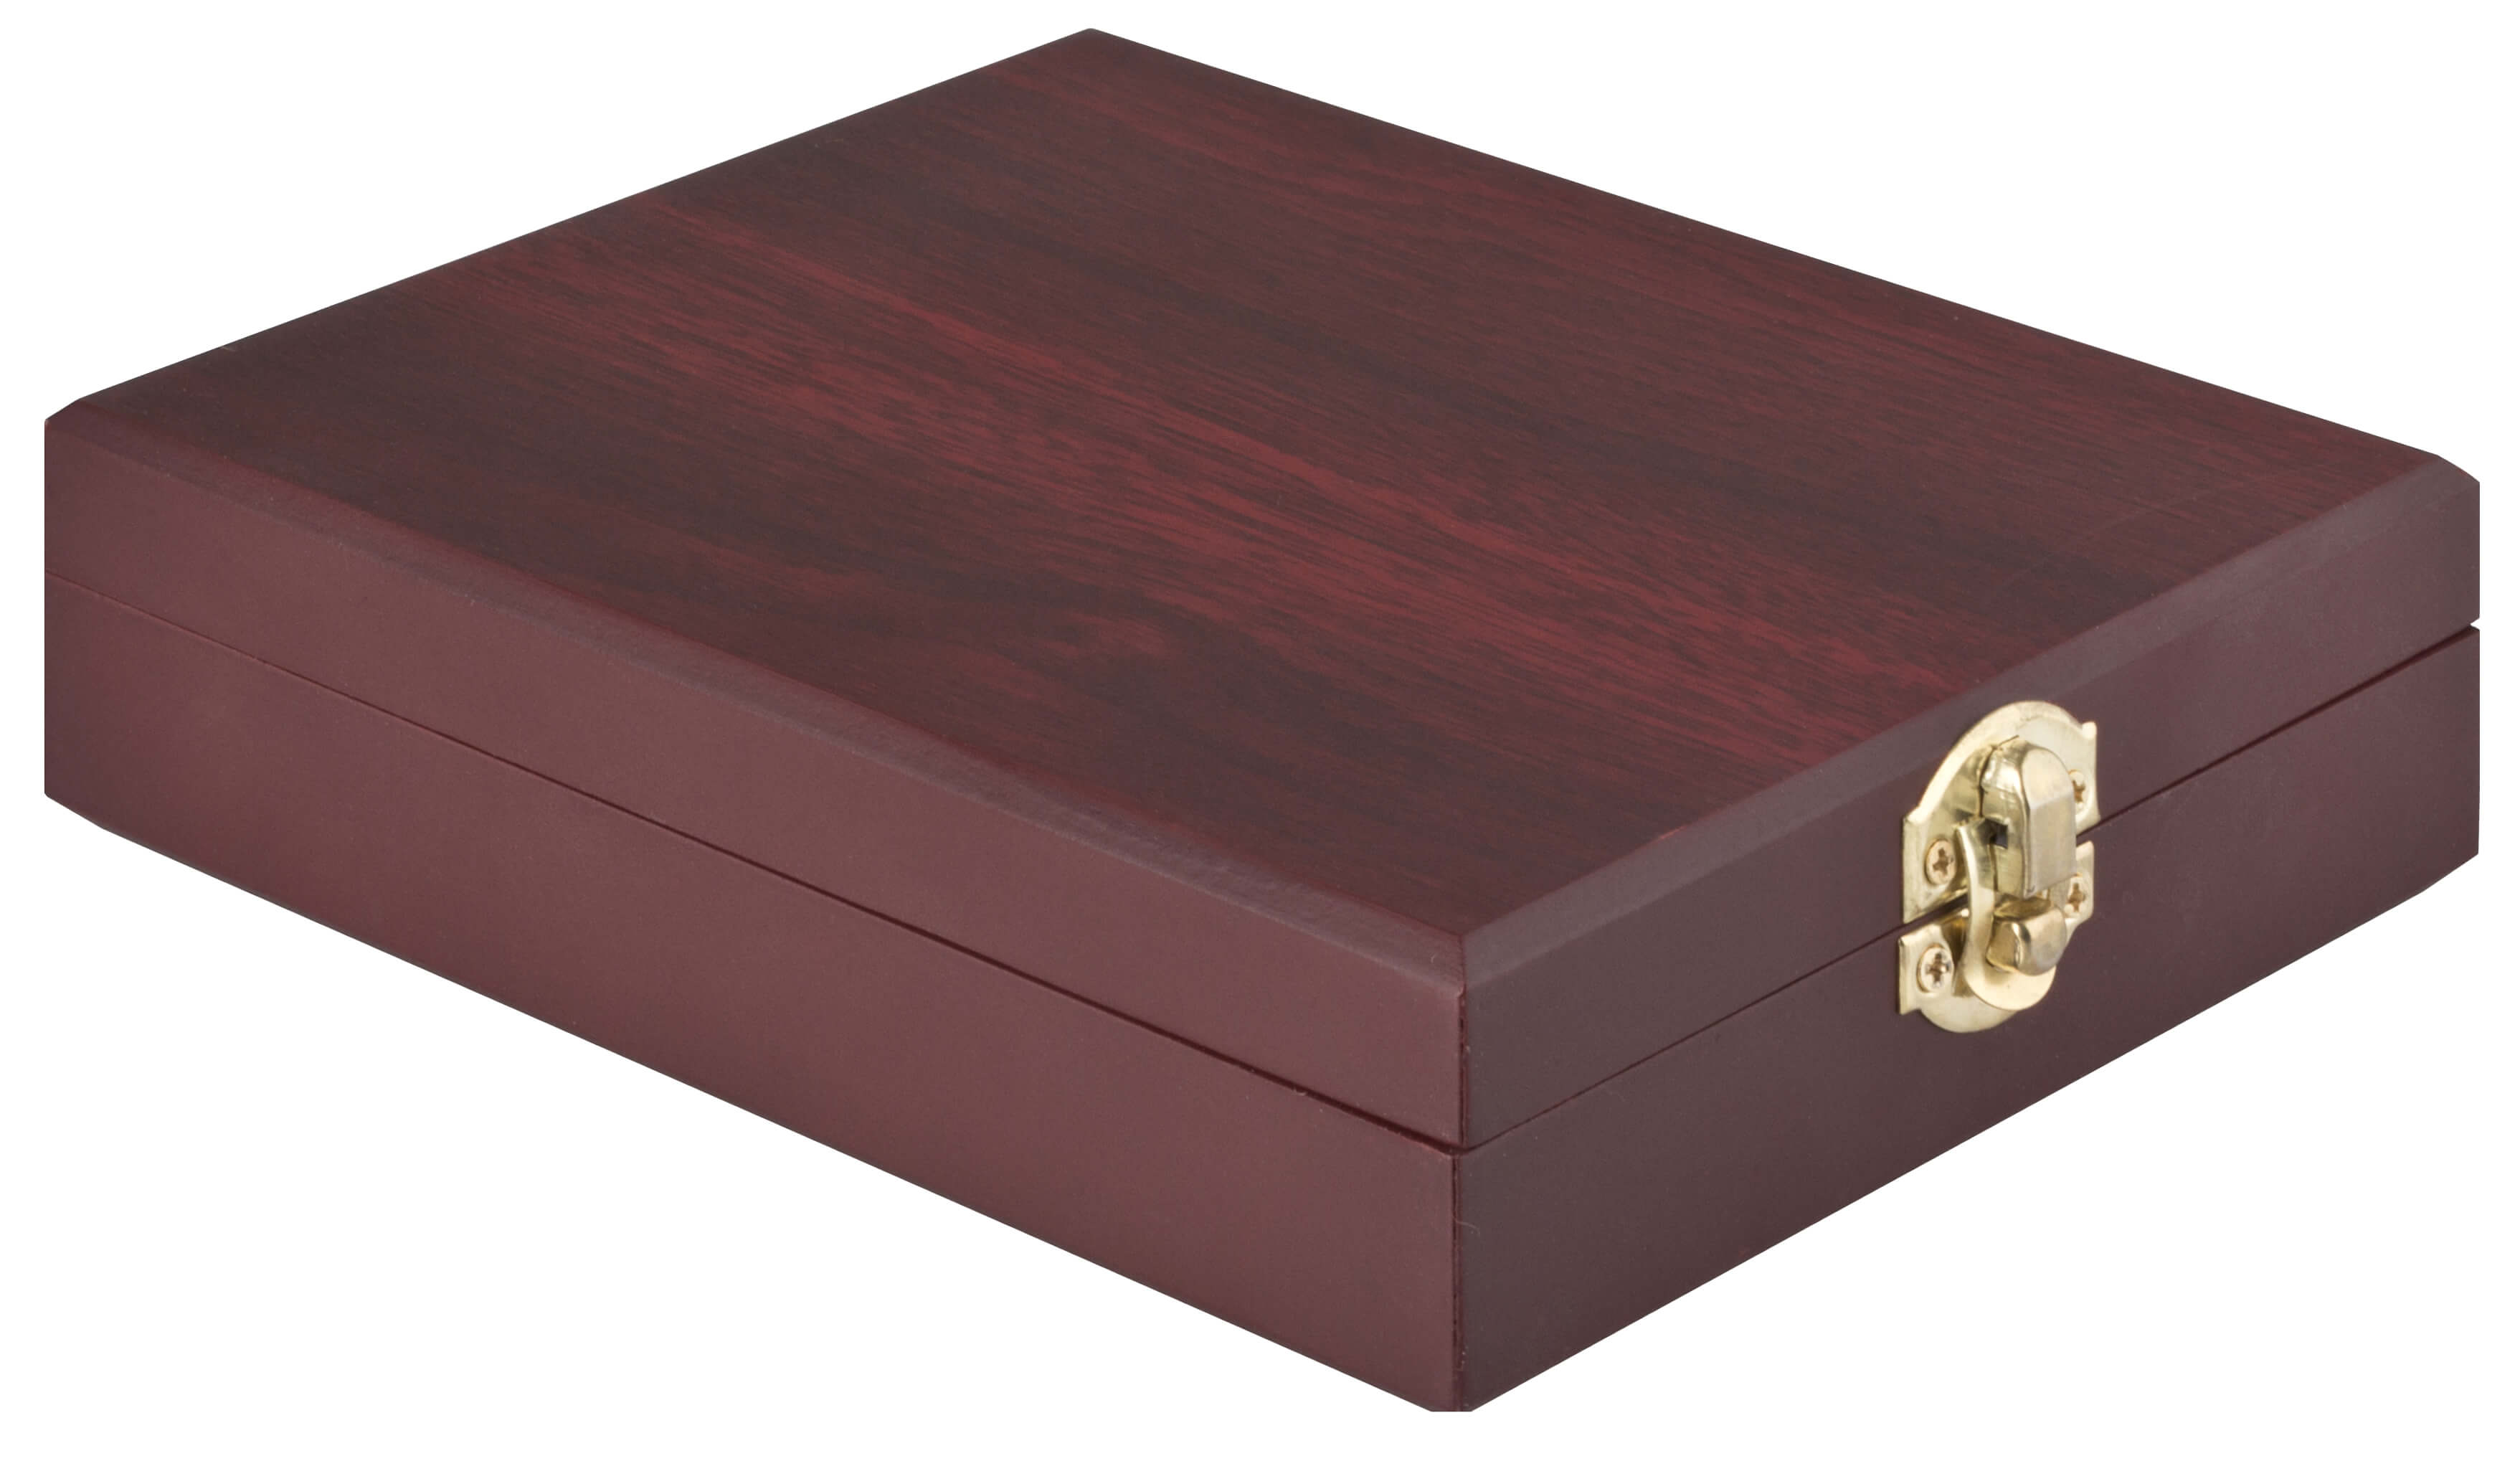 Wine set wooden casket - 5 pieces